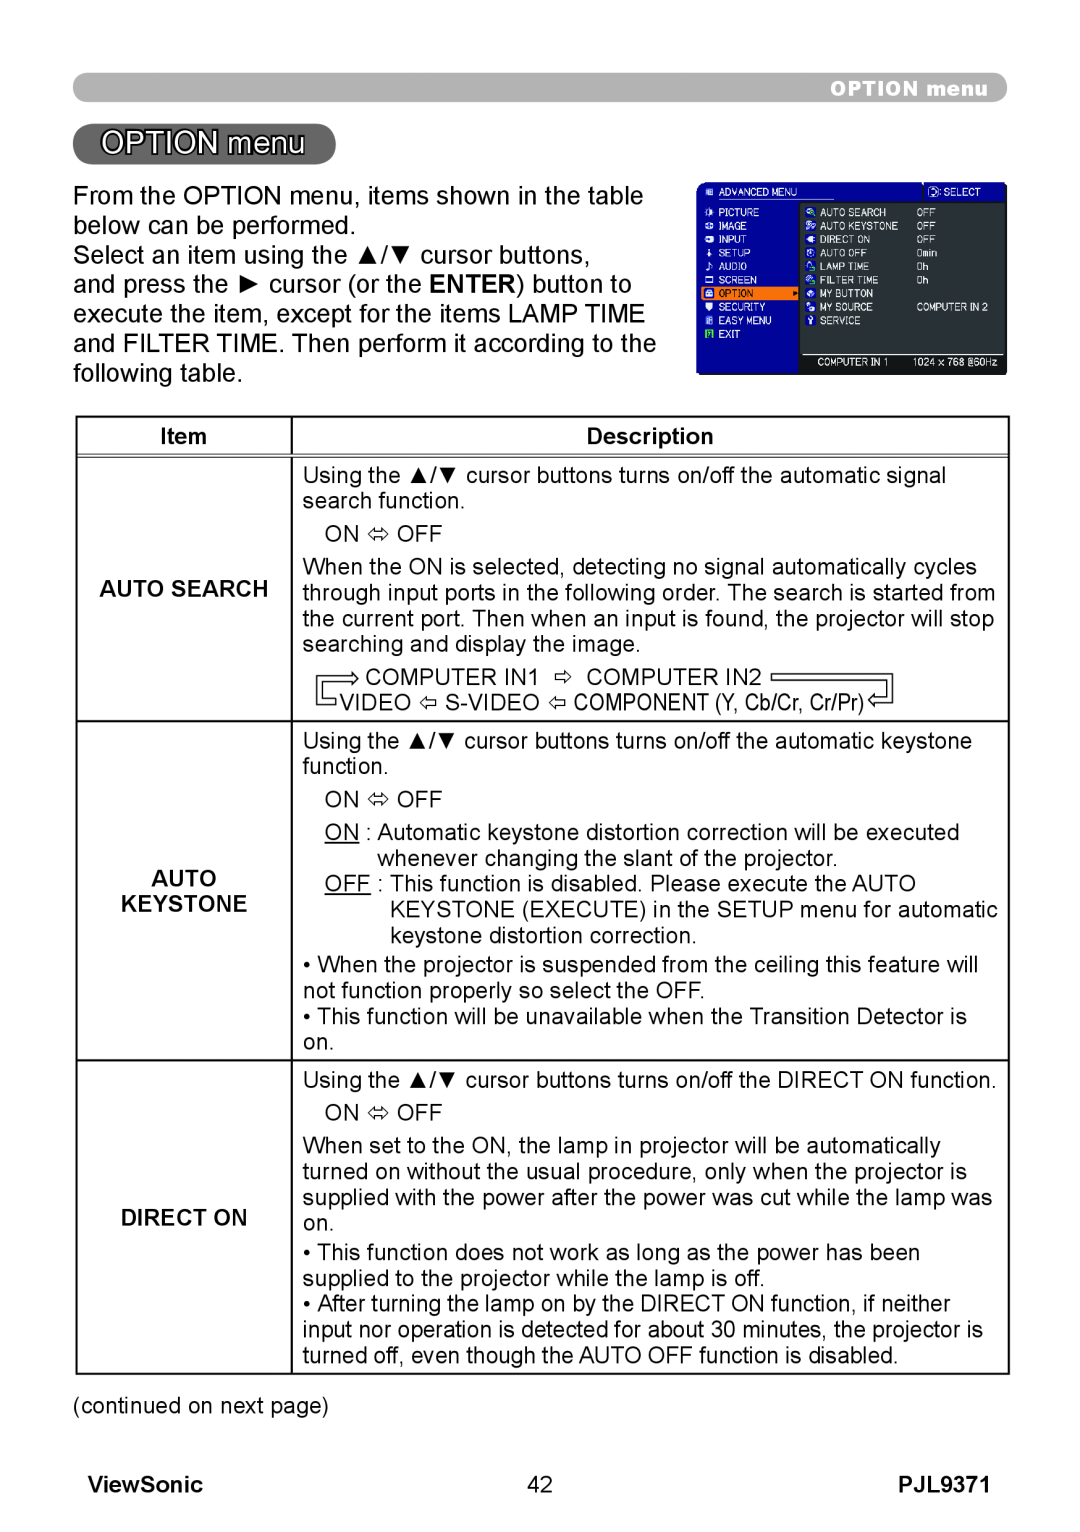 ViewSonic pjl9371 manual OPTION menu, Description, Auto Search, Keystone, Direct On, ViewSonic 